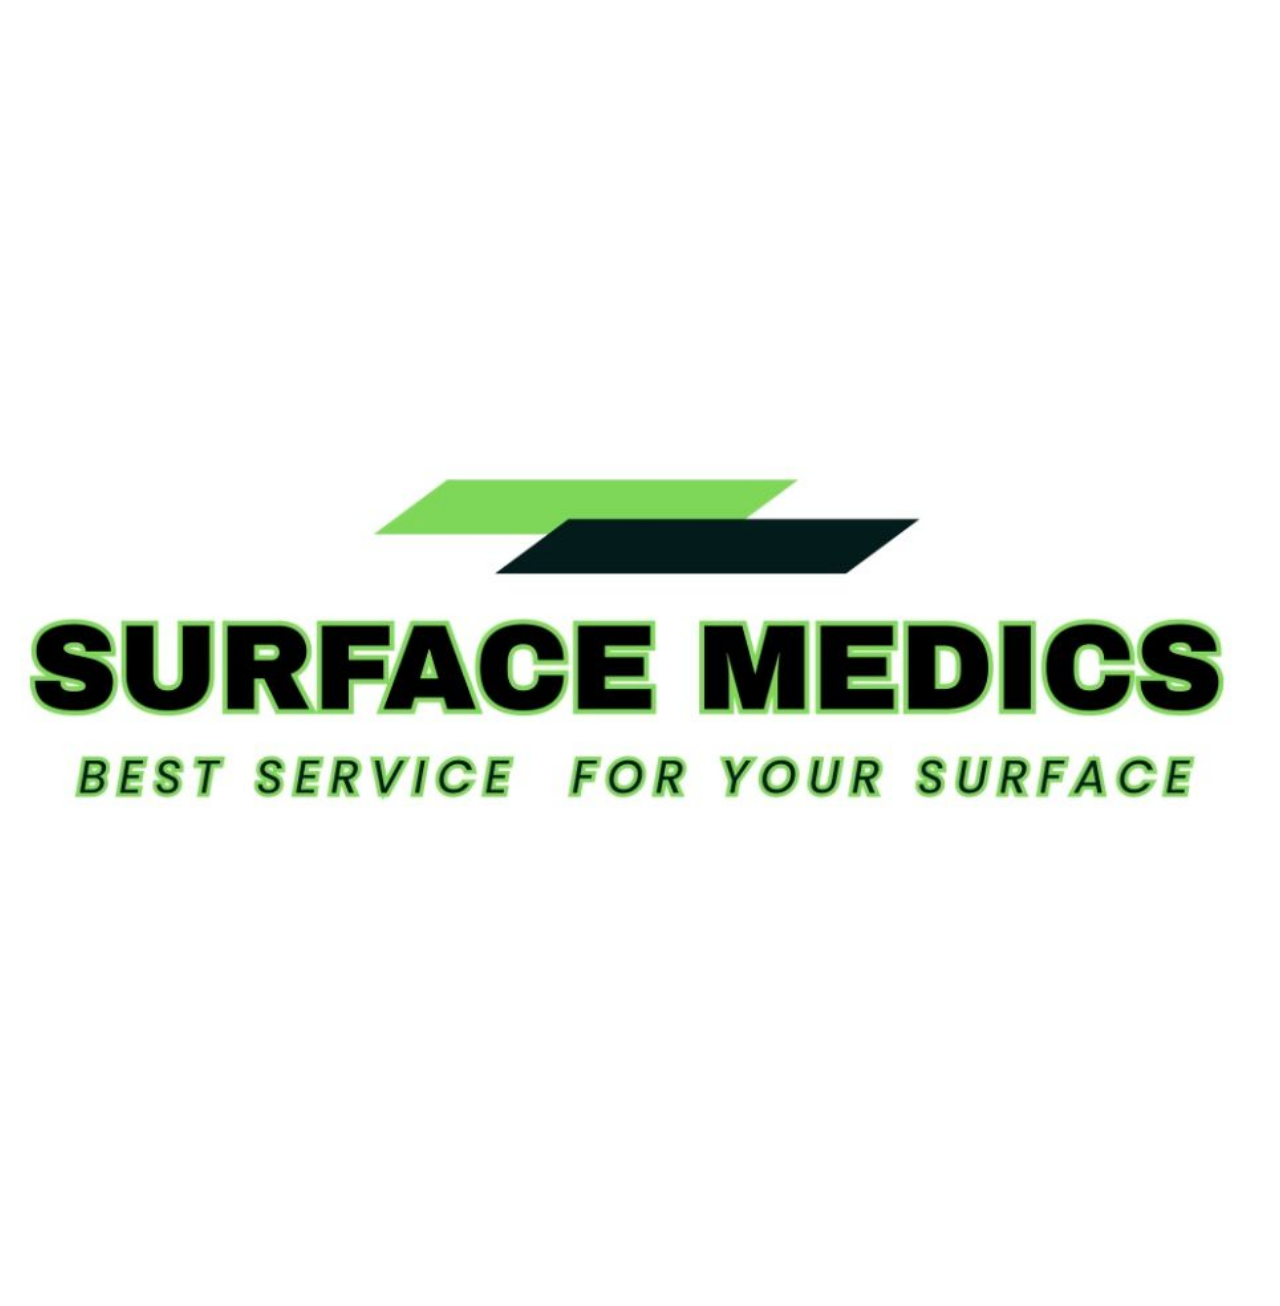 Surface Medics 's web page